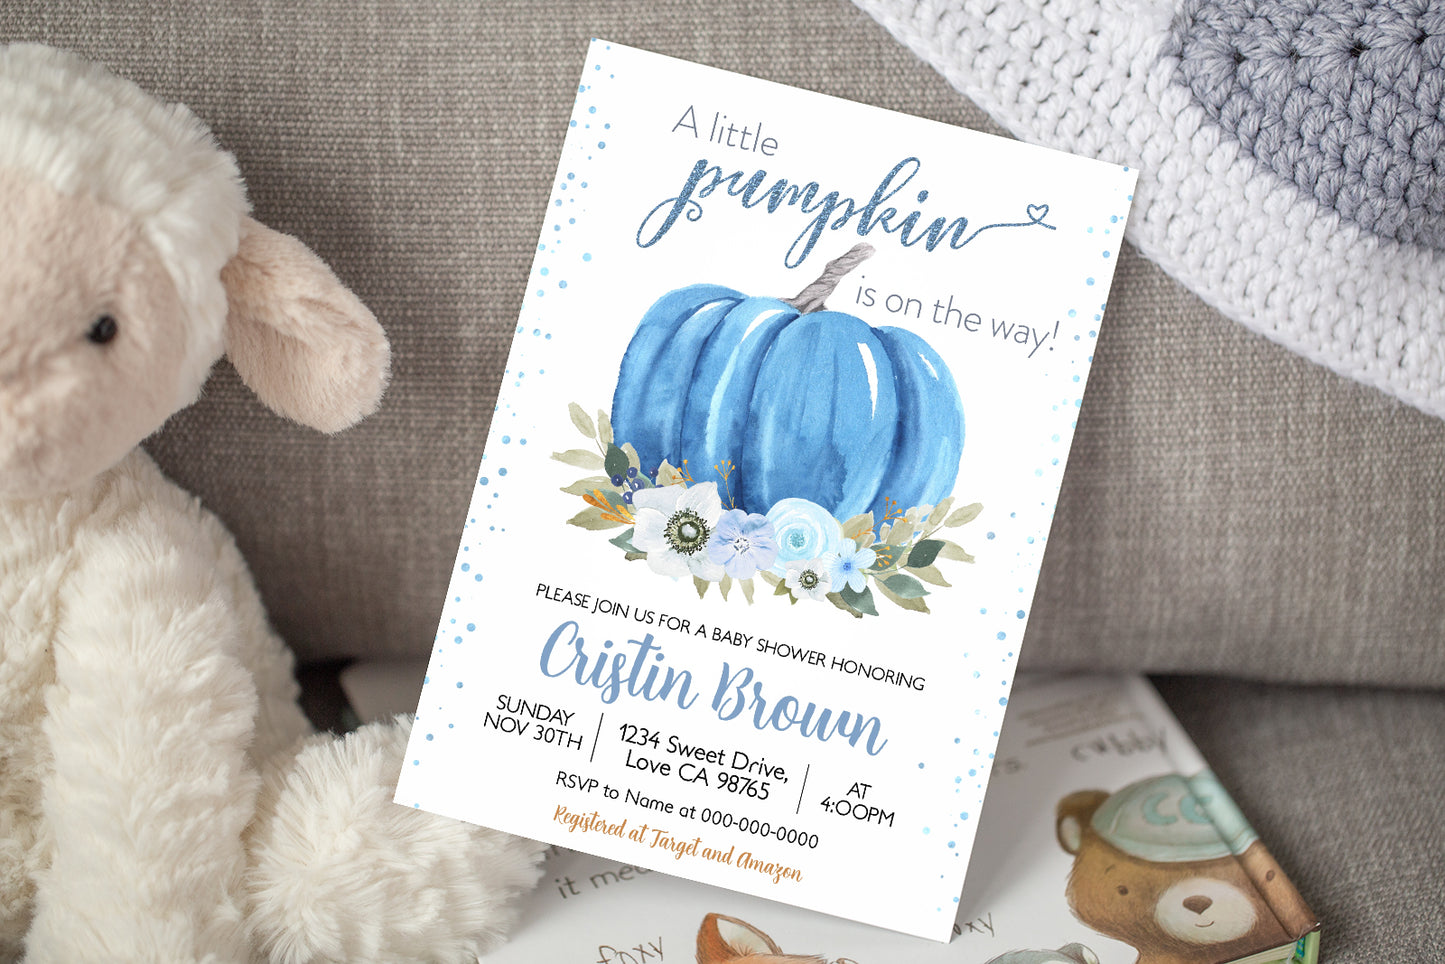 A Little Pumpkin is on the Way Invitation | Editable Pumpkin Baby Shower Boy Invite - 30B